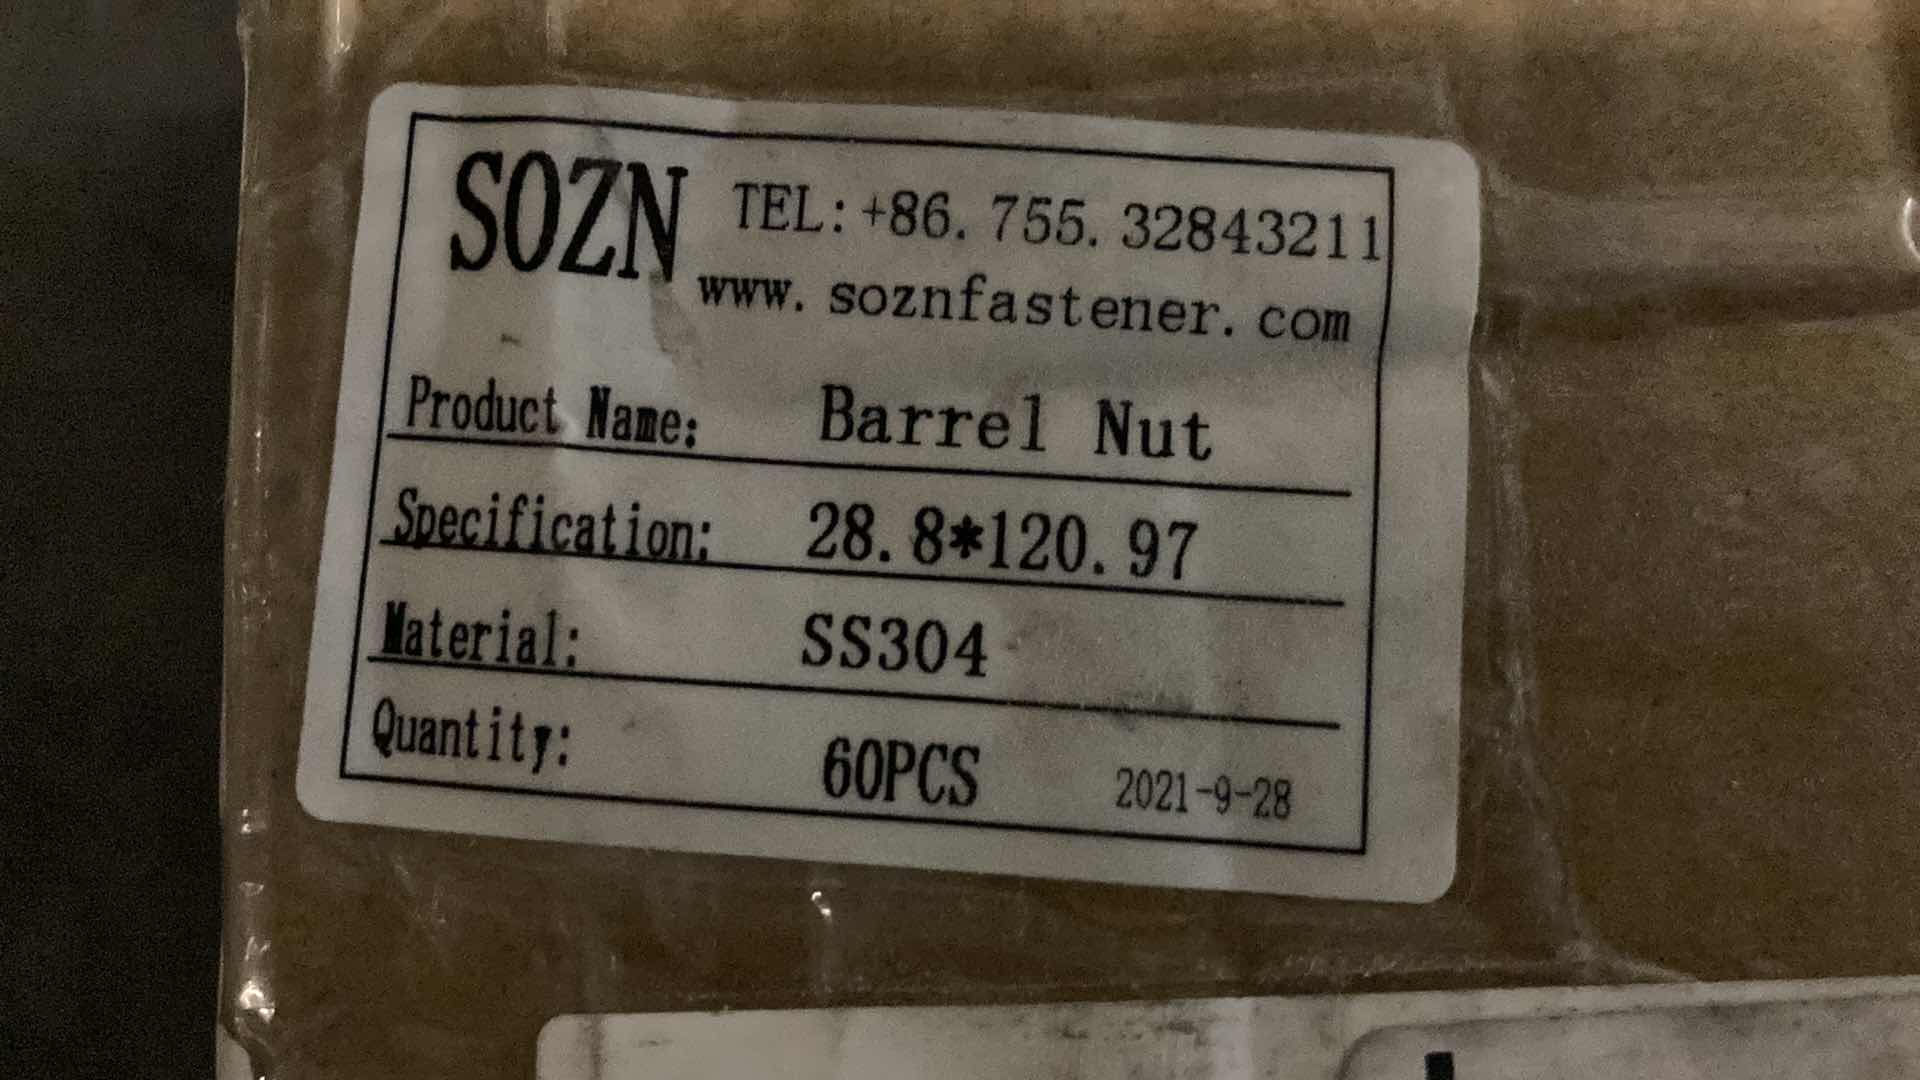 Photo 5 of NEW SOZN FASTENER STAINLESS STEEL BARREL NUTS (60PCS) 28.8mm X 120.97mm